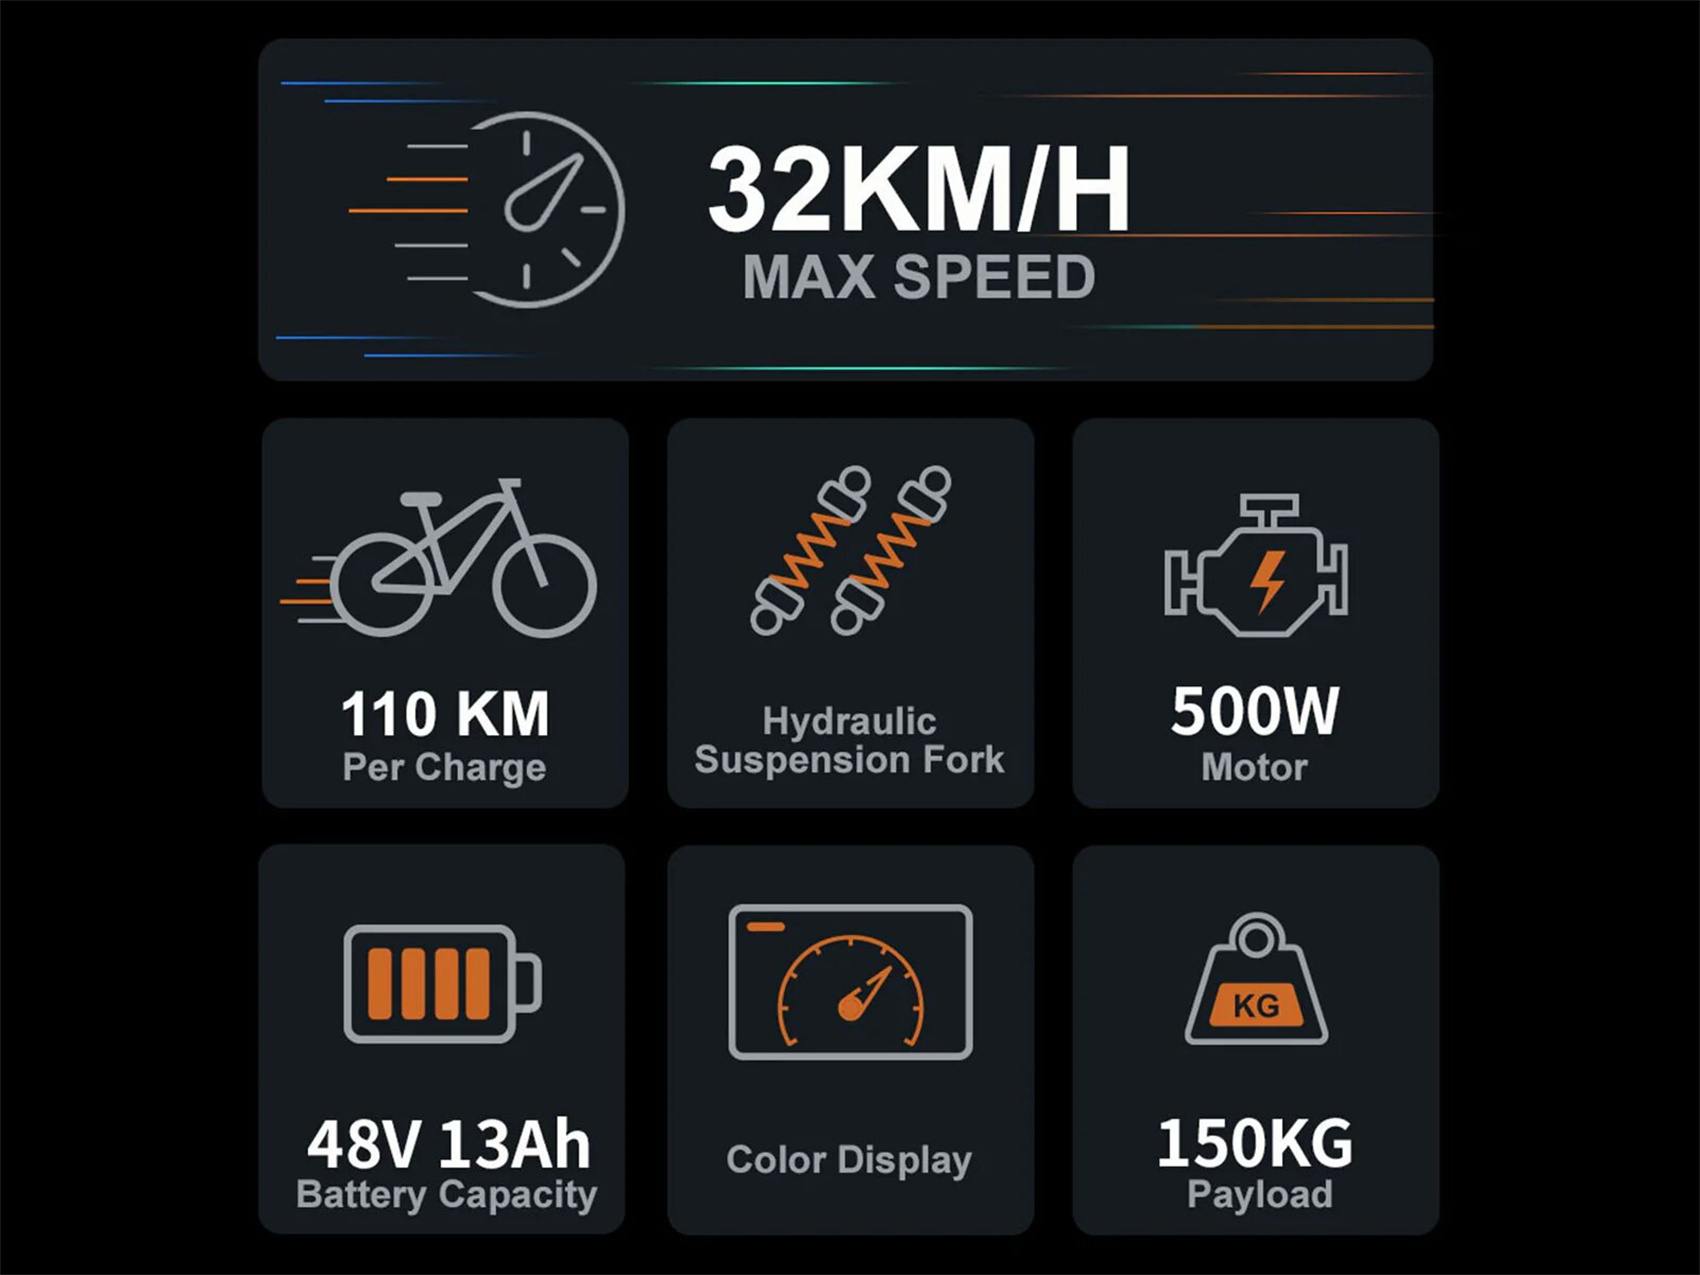 SAMEBIKE E-BIKE Mountainbike (Laufradgröße: Weiß) Unisex-Rad, 27,5 Zoll